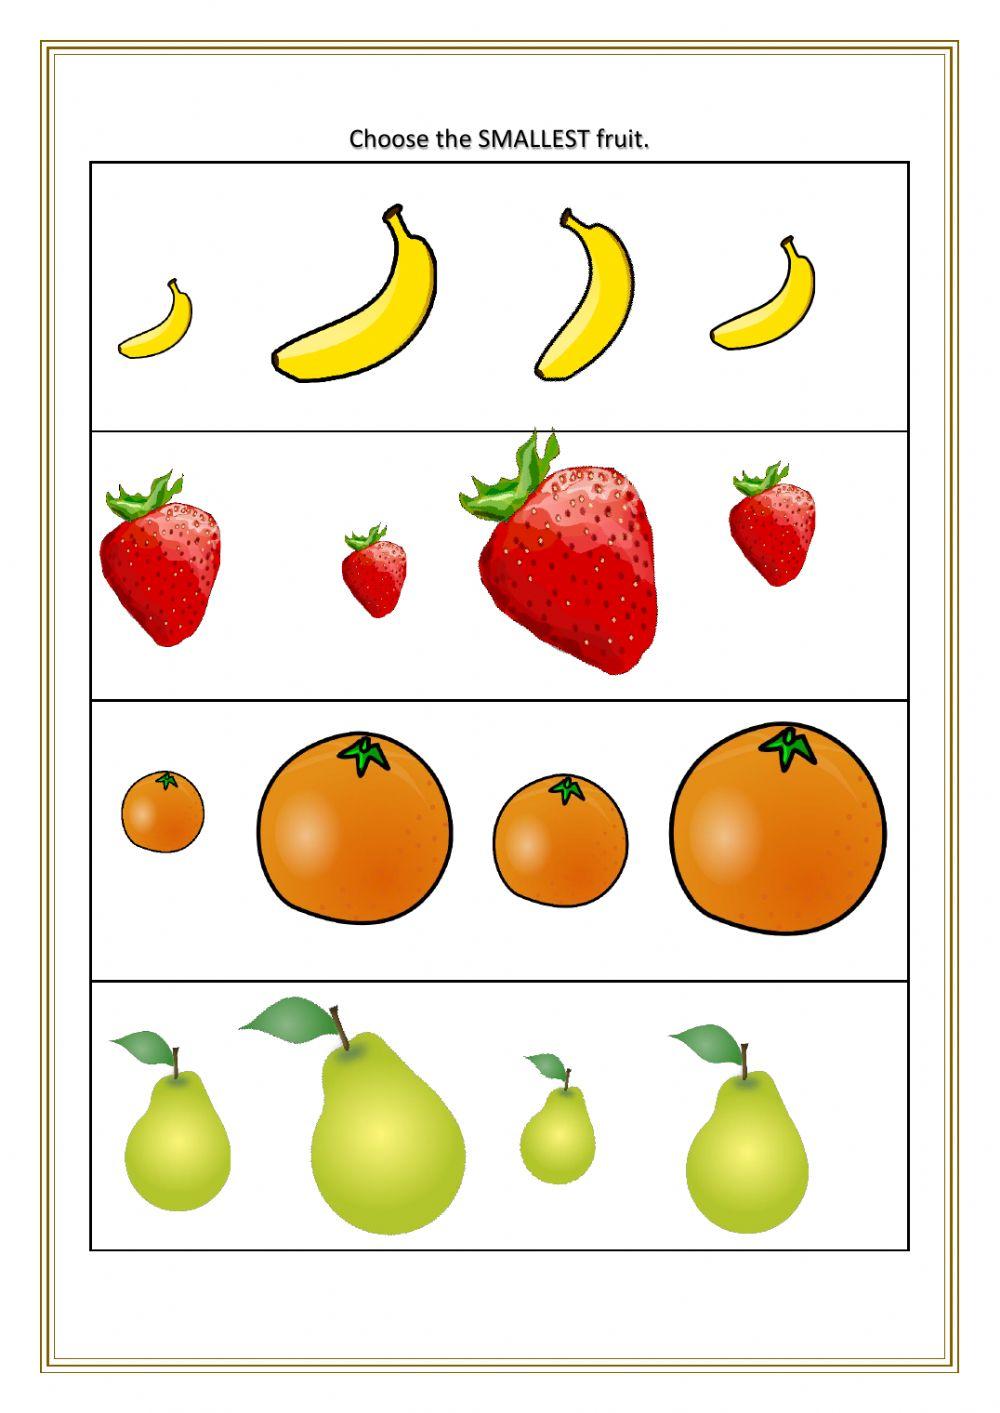 Choose the smallest fruit